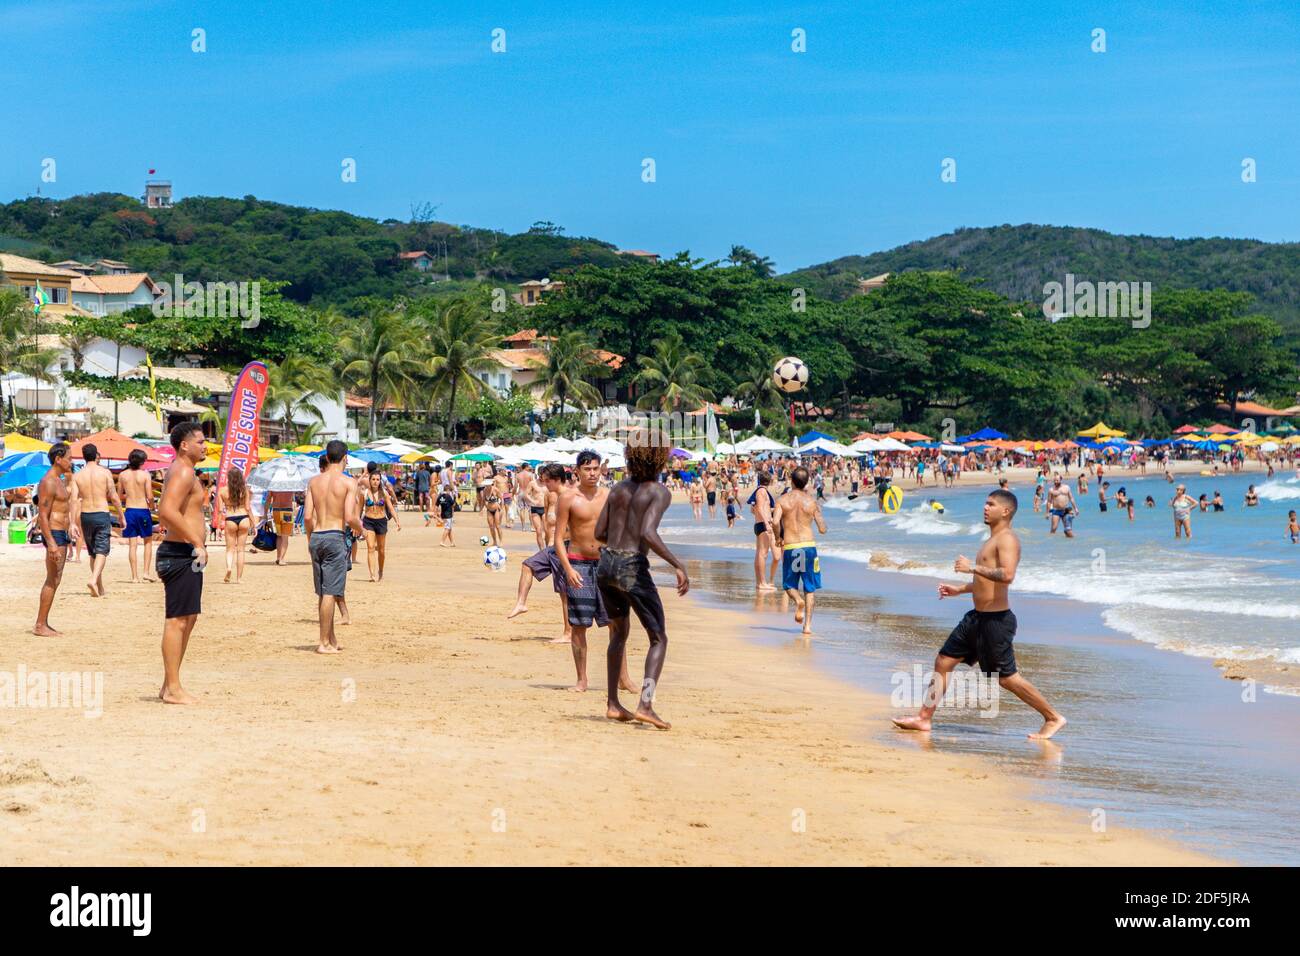 Geriba beach, Buzios, Rio de Janeiro, Brazil – December 22, 2019: Group of men having fun playing football on the beach. Lots of people around them. P Stock Photo